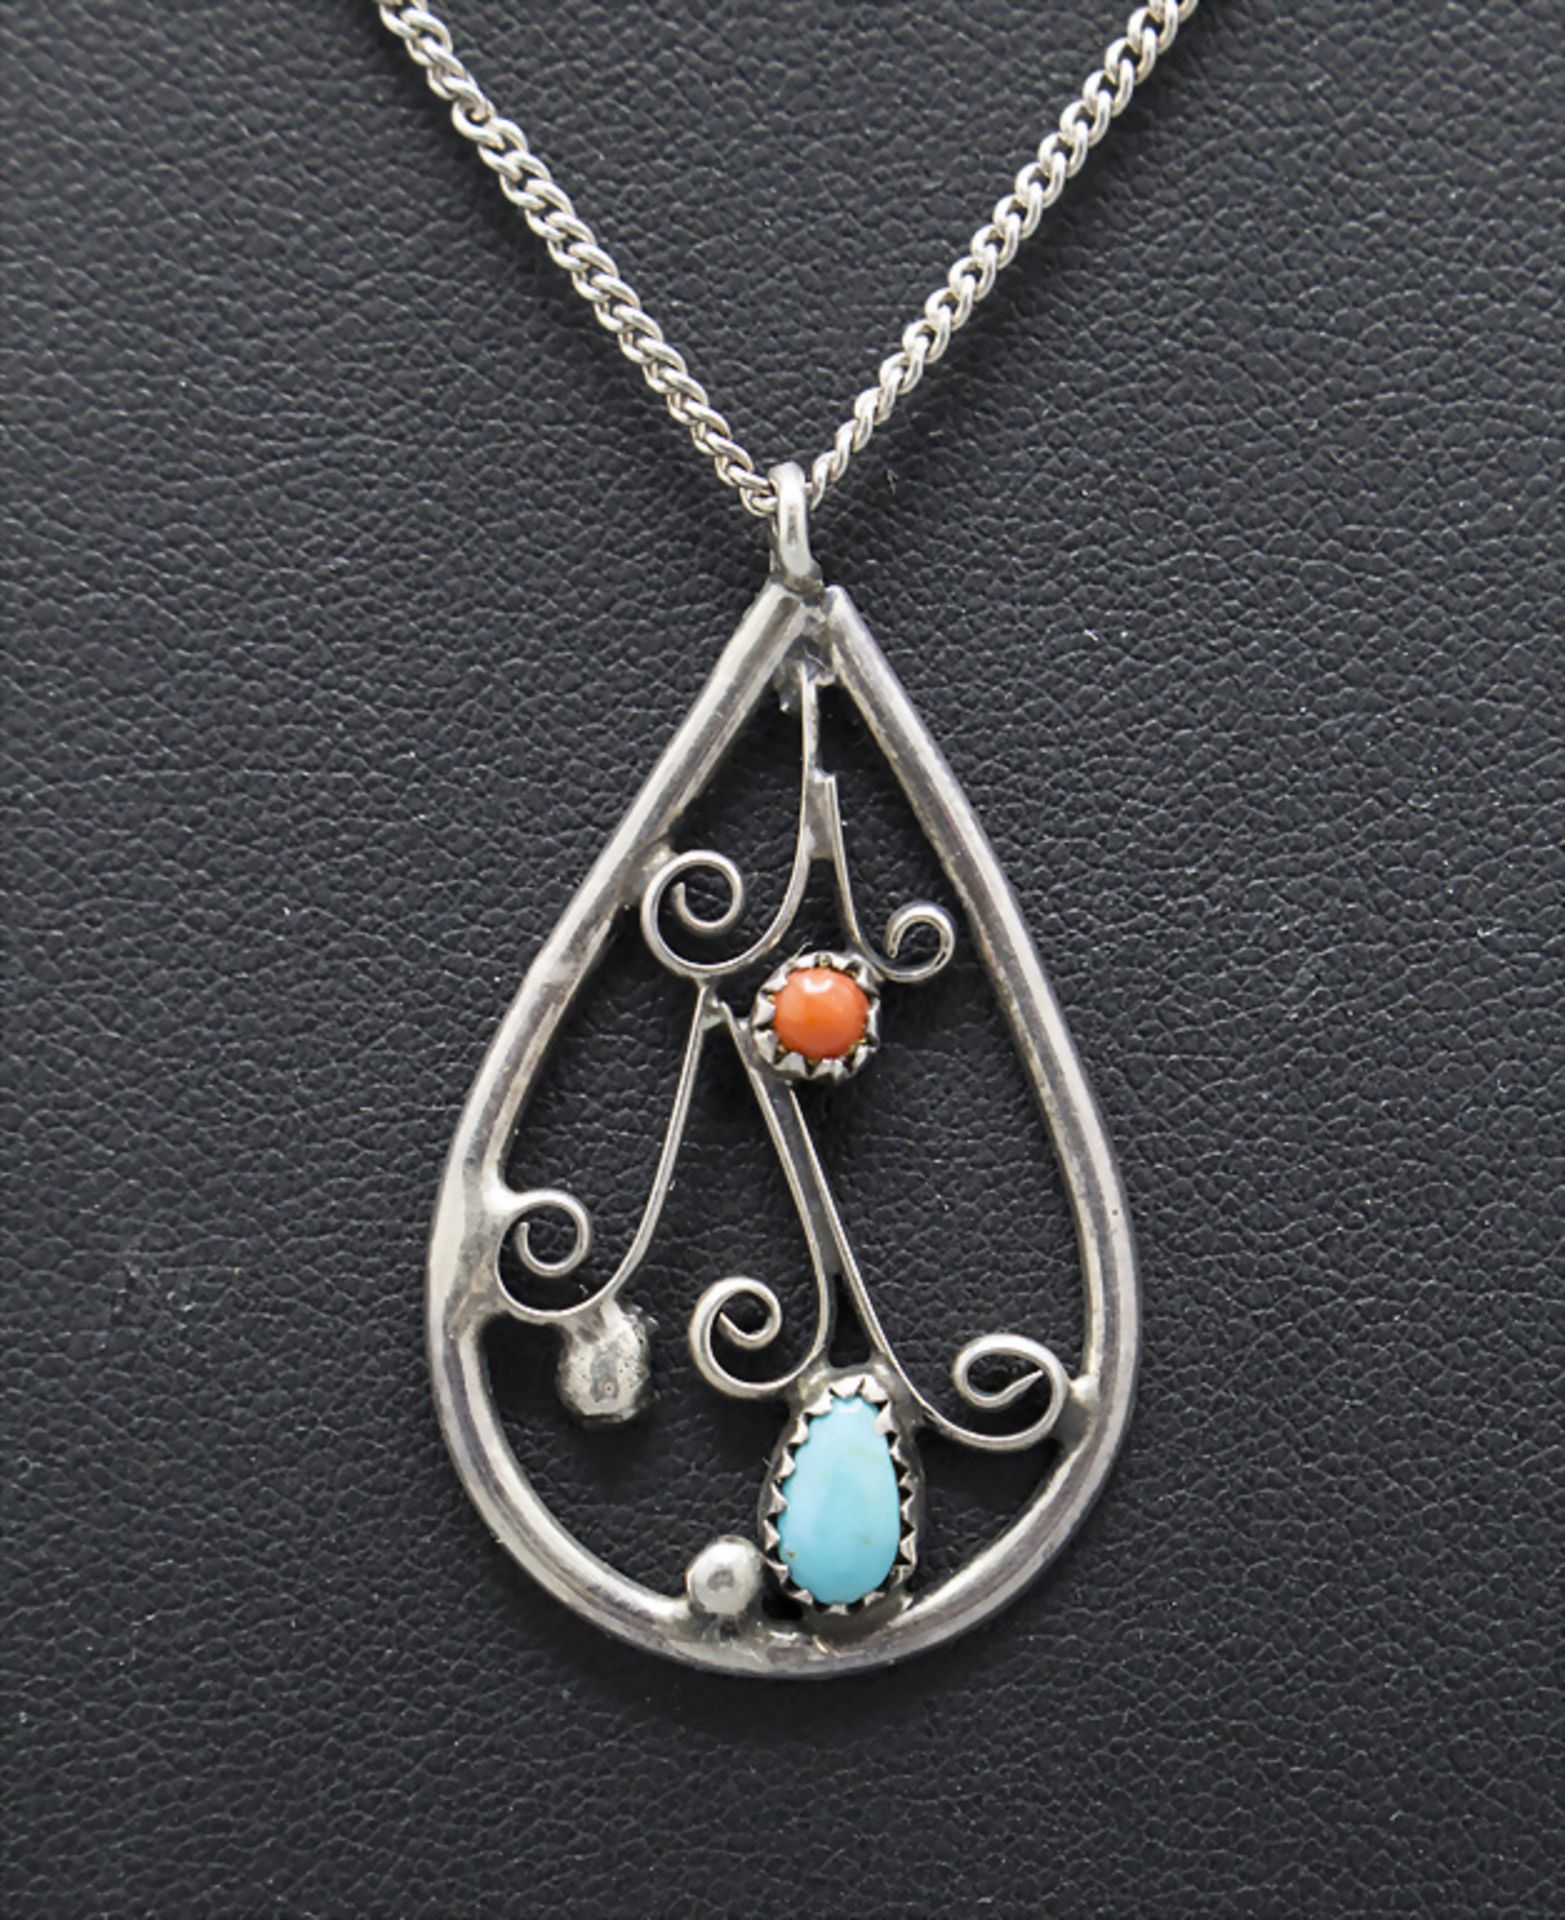 Jugendstil Anhänger mit Kette / An Art Nouveau pendant with necklace